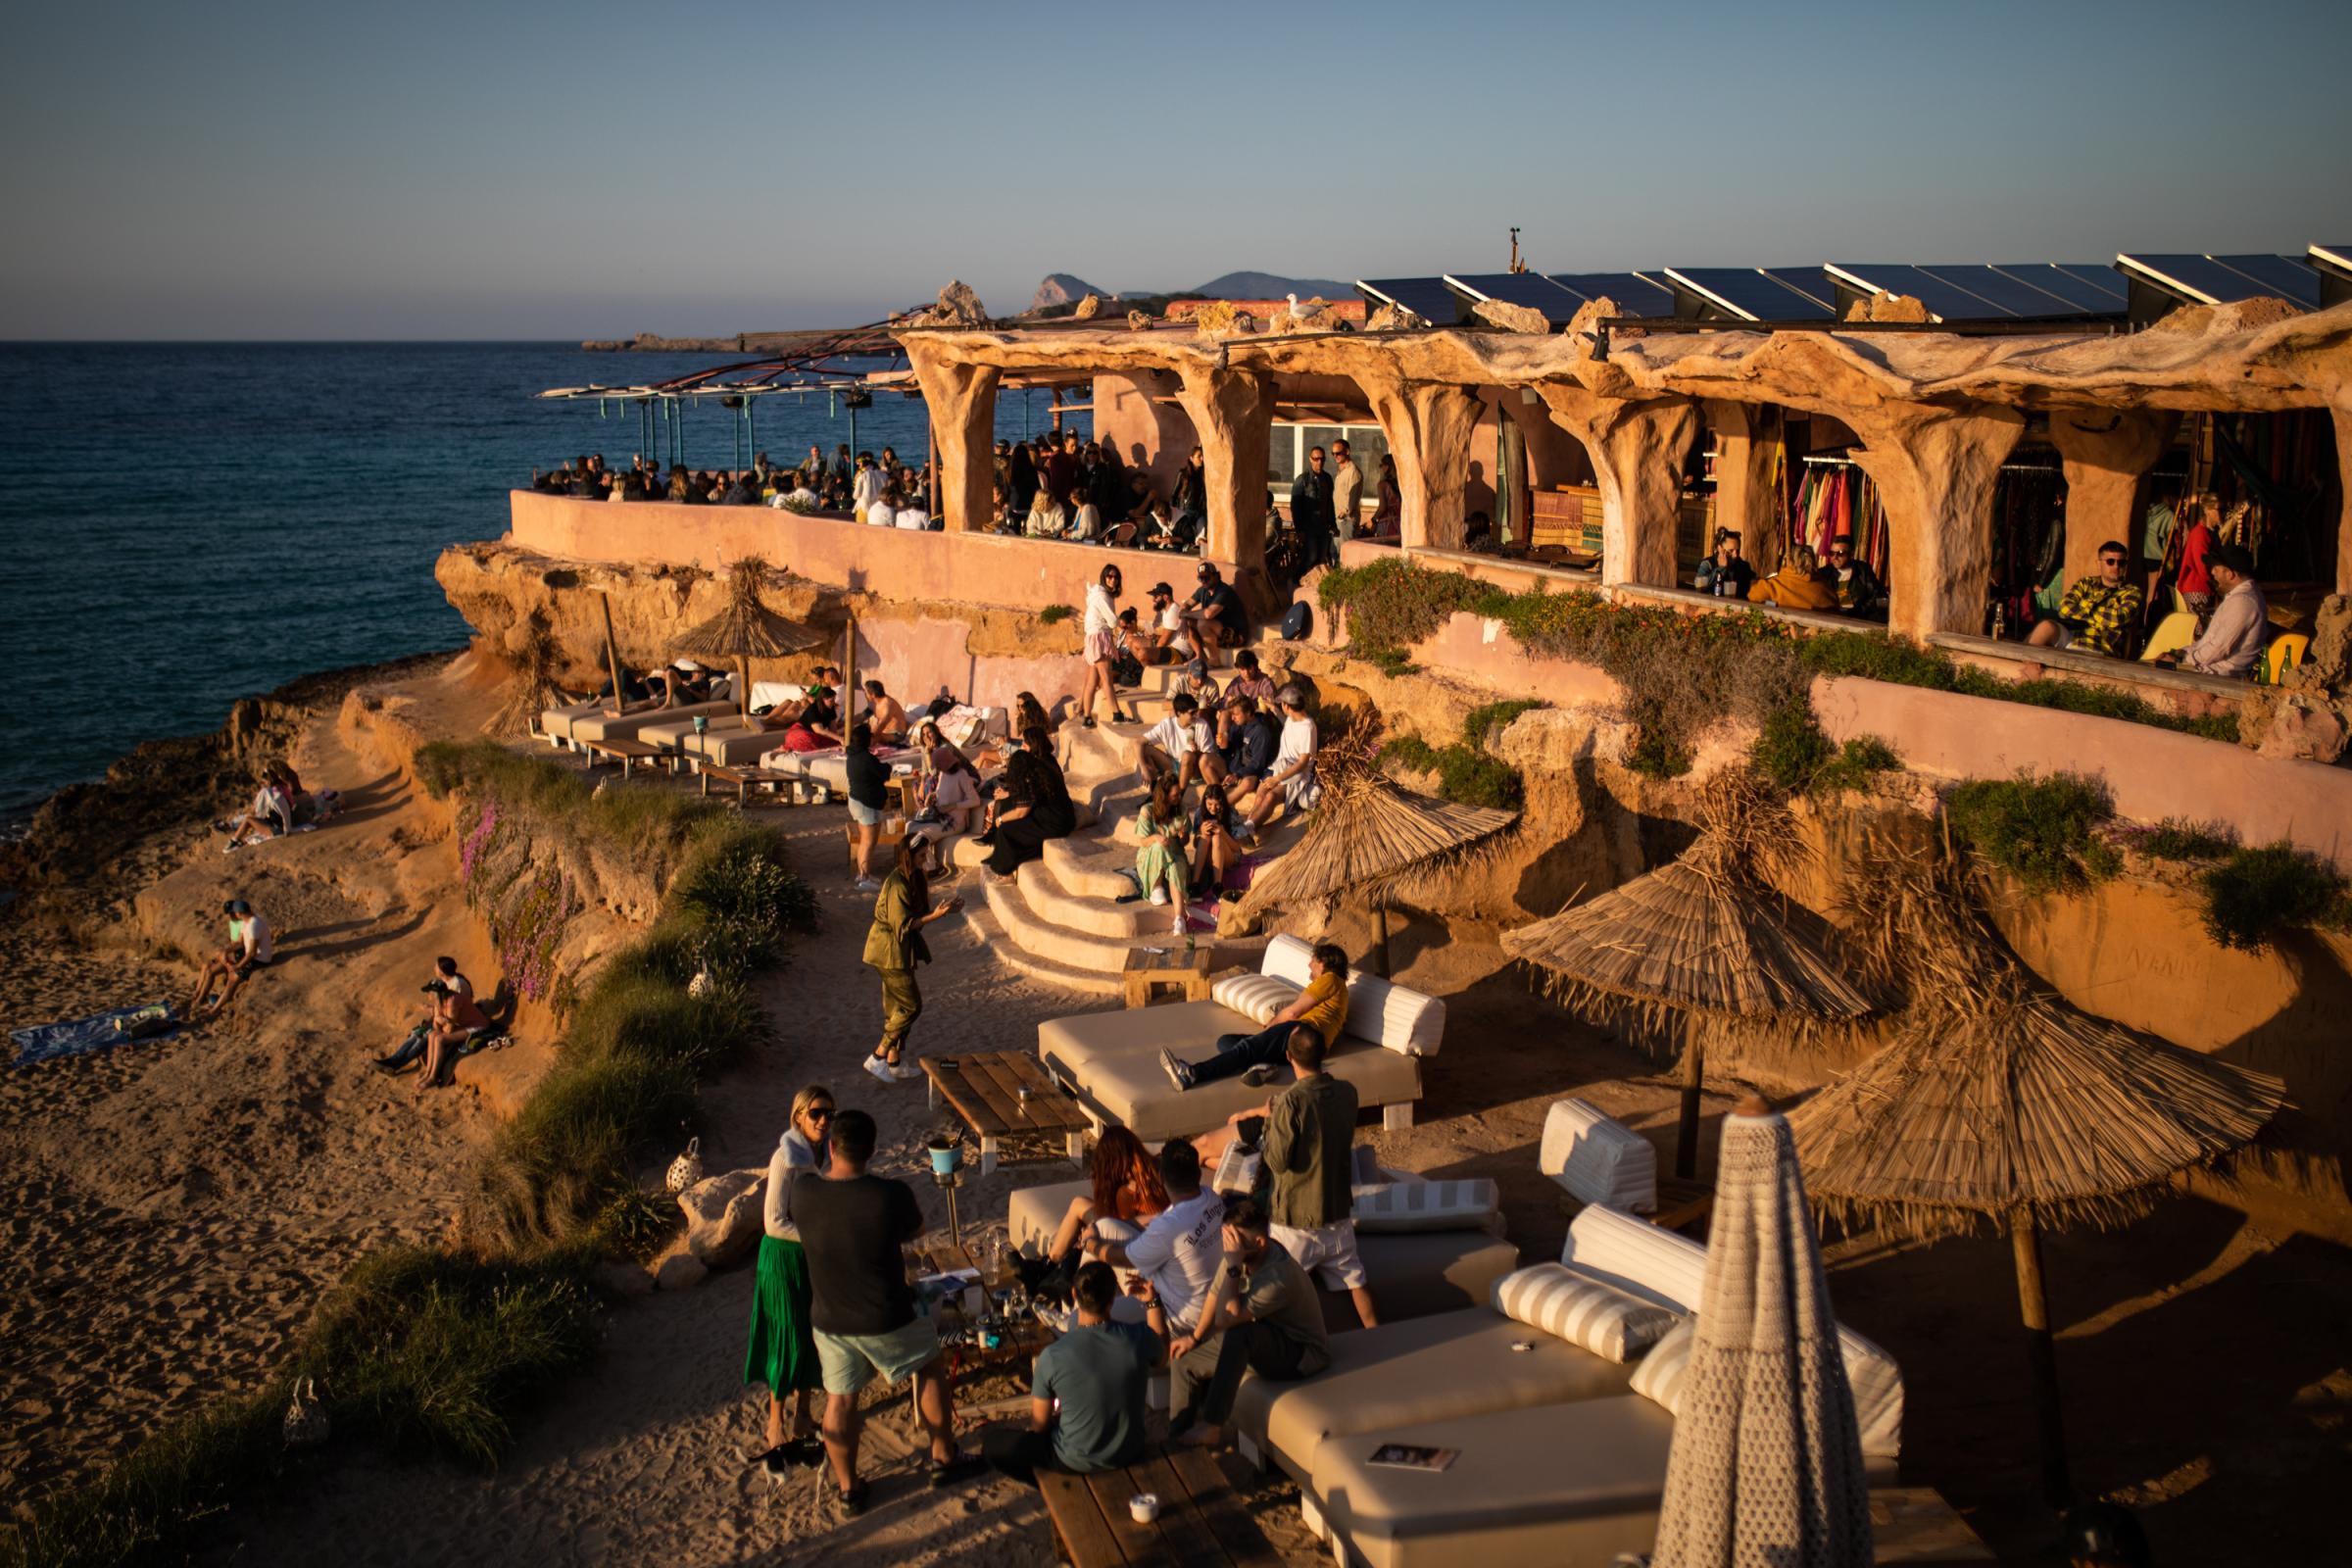 Grand Opening At Pacha Ibiza Heralds A Pre-Pandemic Party Season - Tourists enjoy the sunset at the Sunset Ashram beach bar...